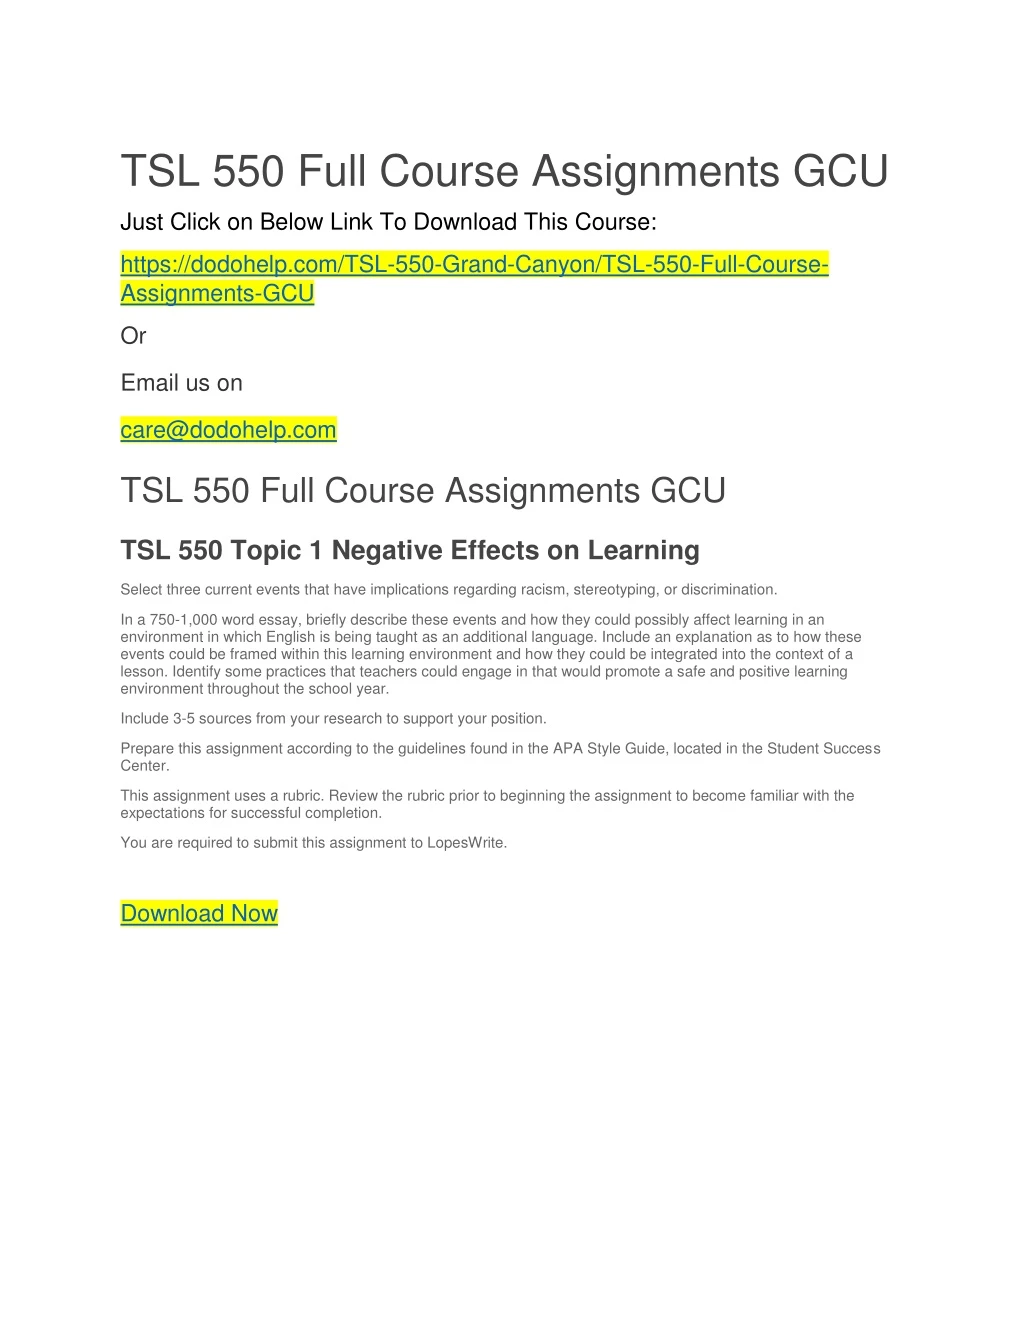 tsl 550 full course assignments gcu